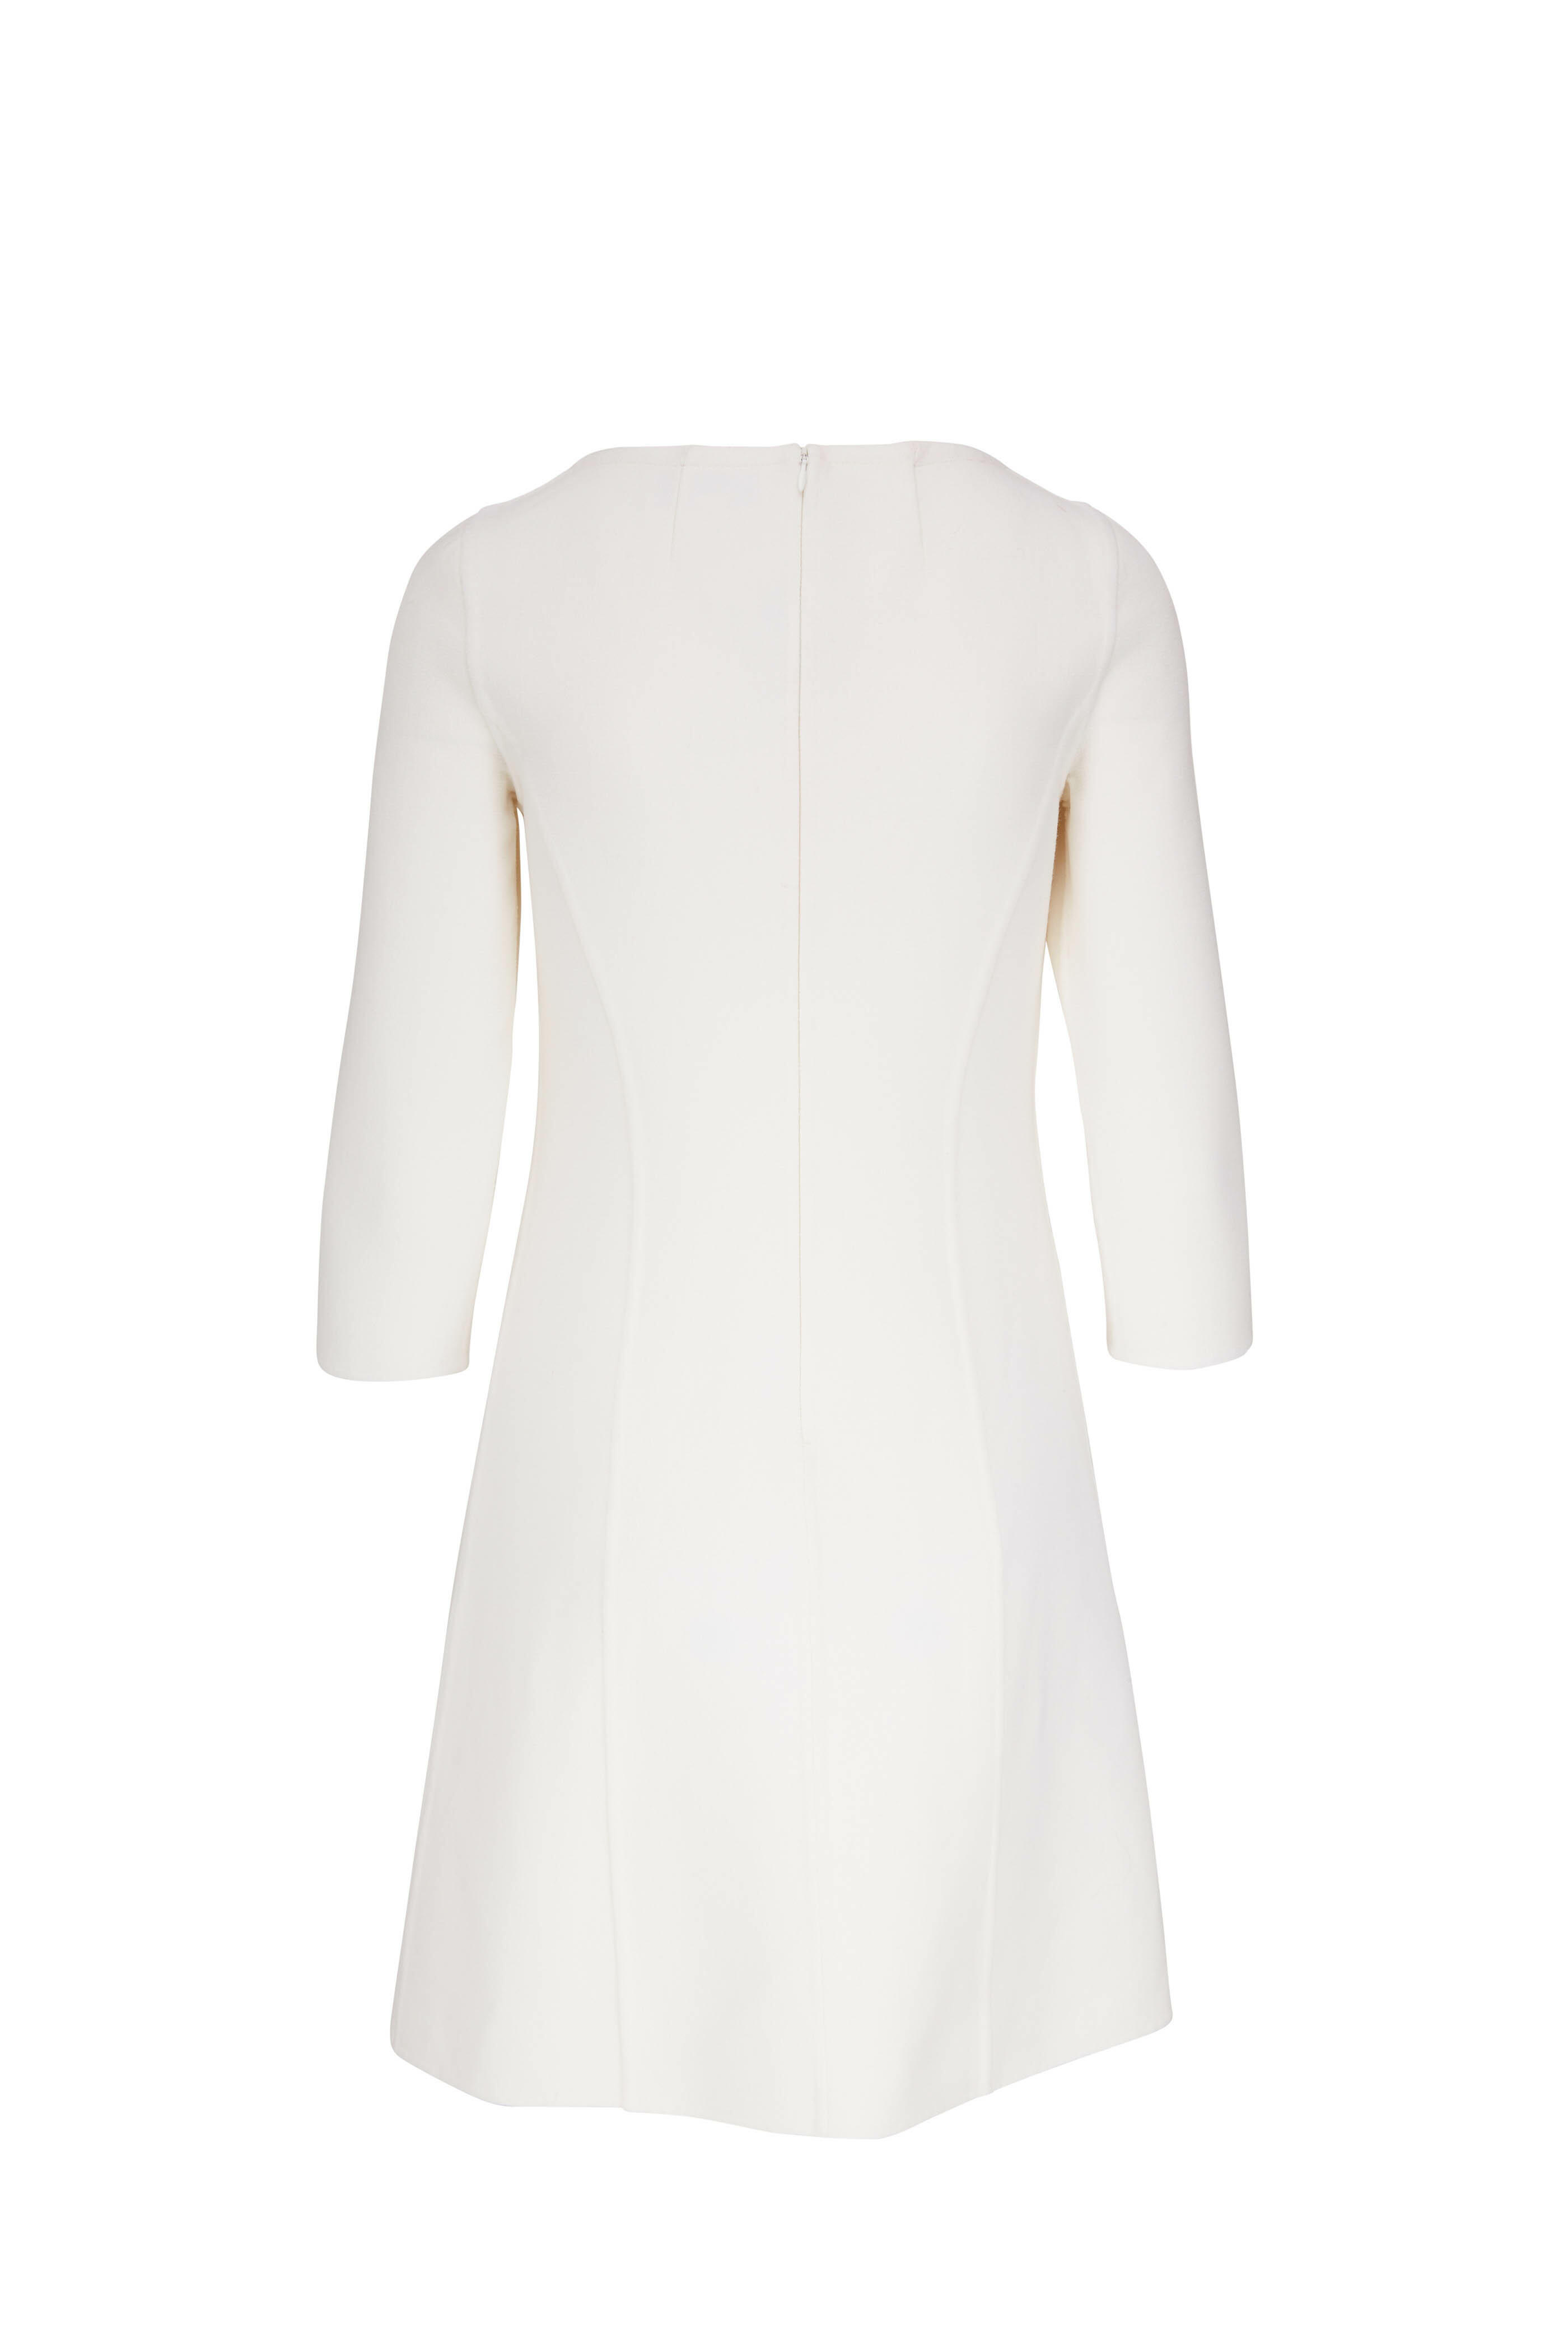 Michael Kors Sleeve Three-Quarter - Shift Collection Dress Wool White